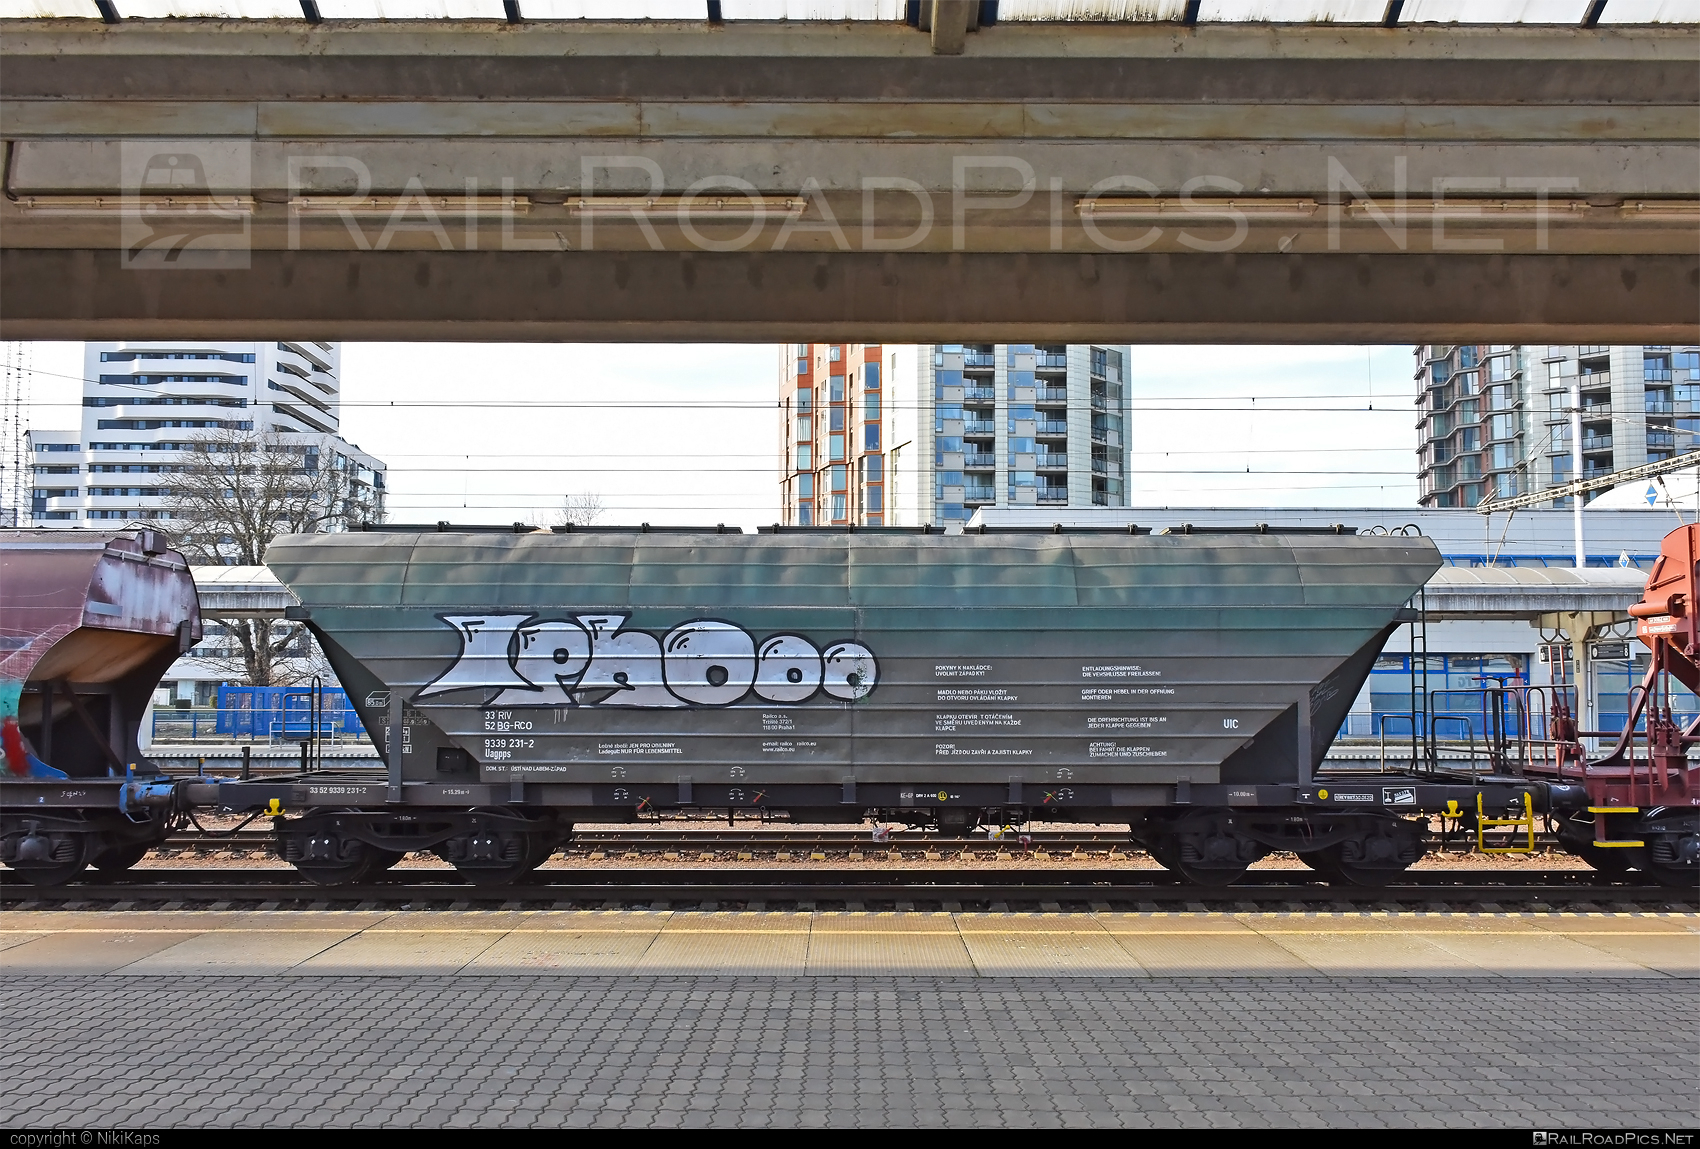 Class U - Uagpps - 9339 231-2 operated by Railco a.s. #graffiti #railco #uagpps